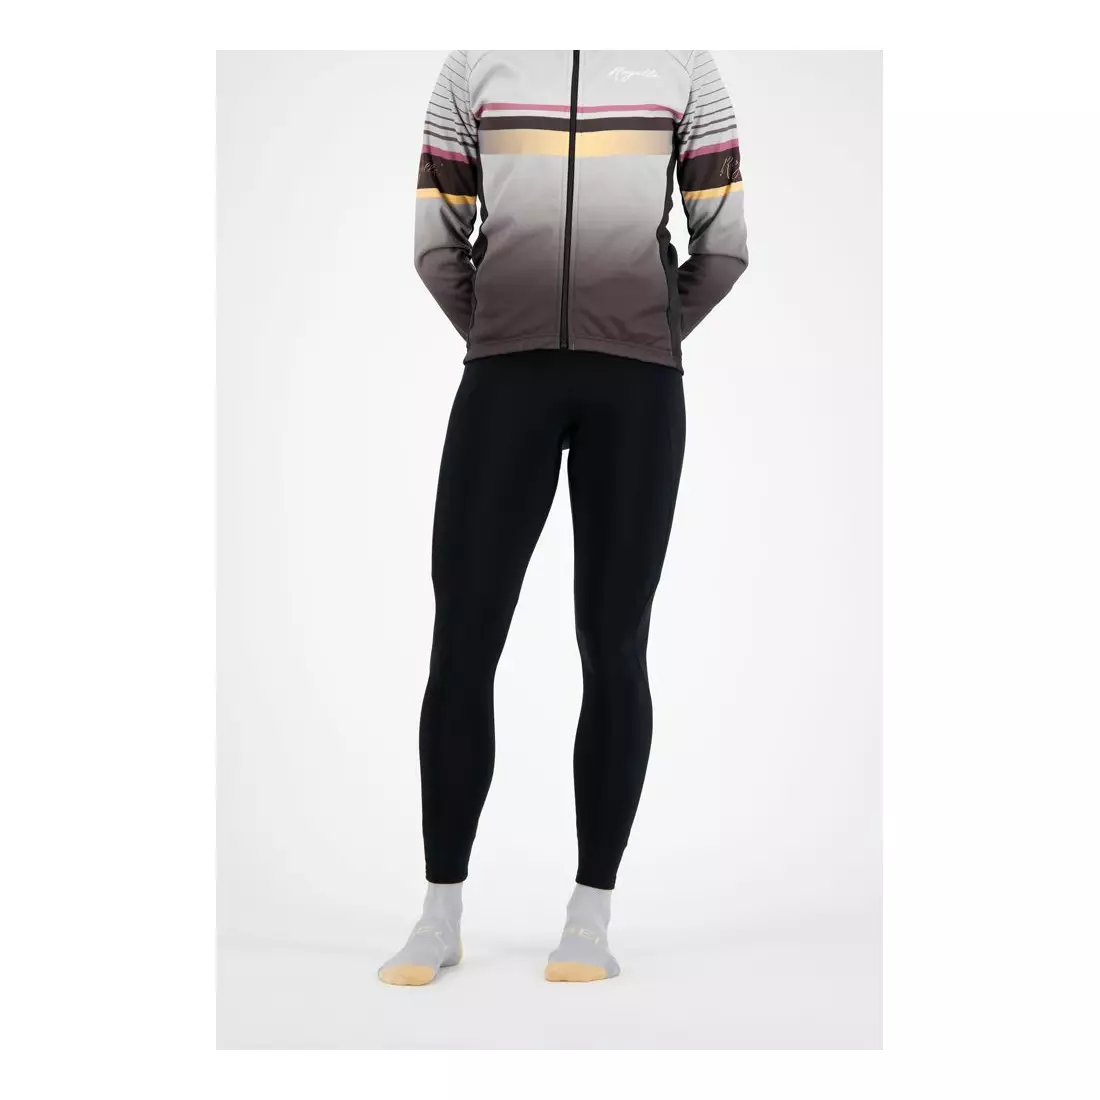 ROGELLI women's cycling pants with braces NERO black